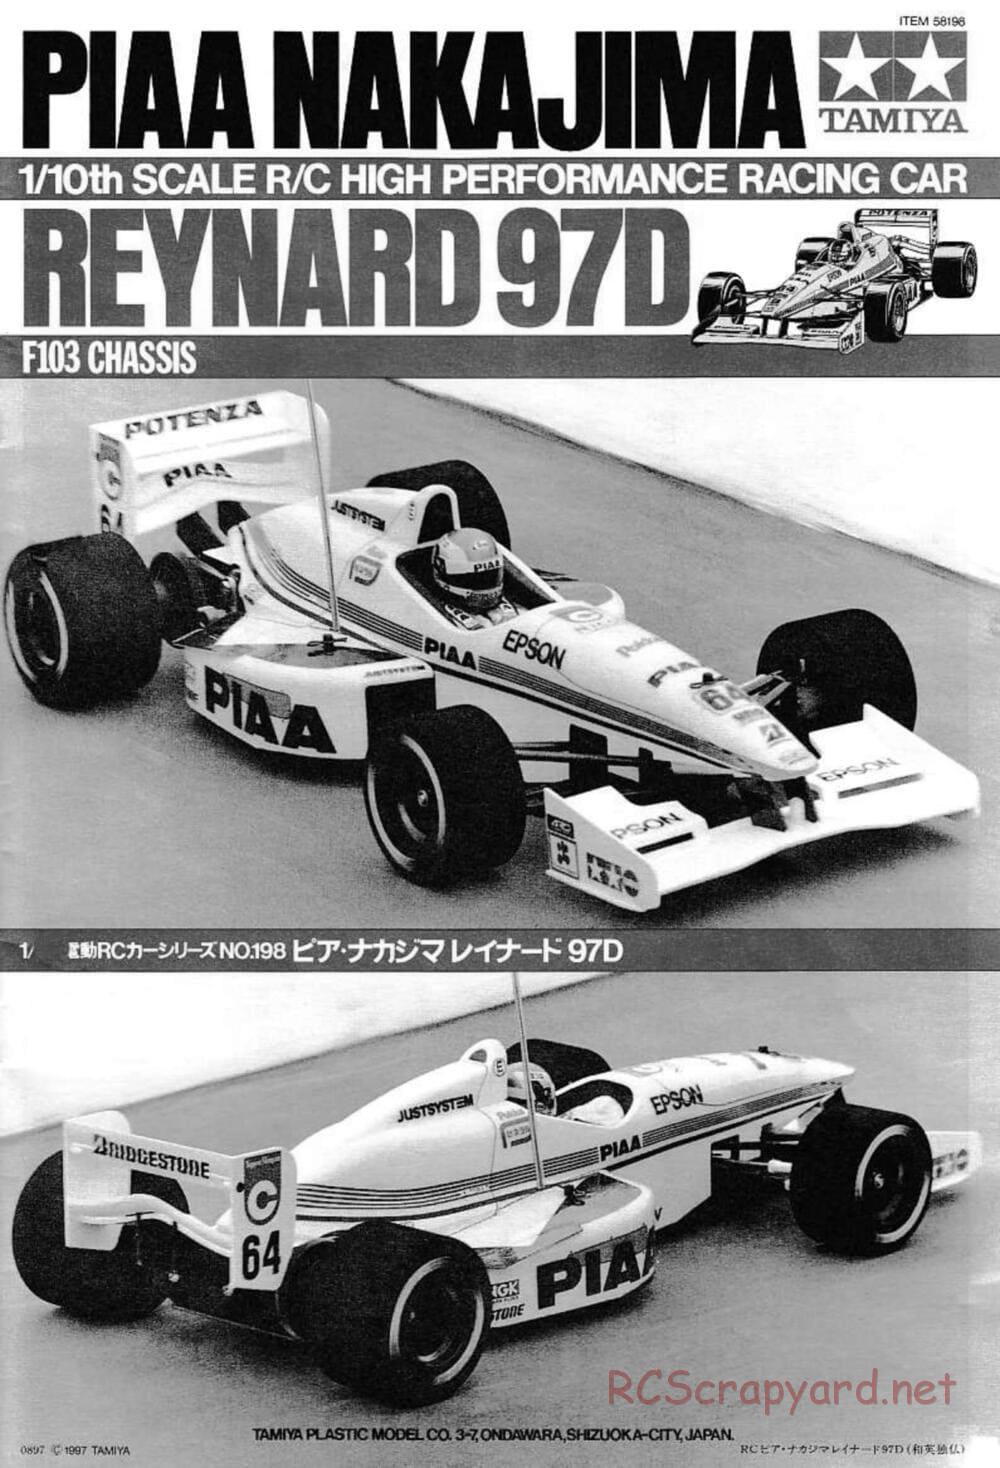 Tamiya - PIAA Nakajima Reynard 97D - F103 Chassis - Manuel - Page 1